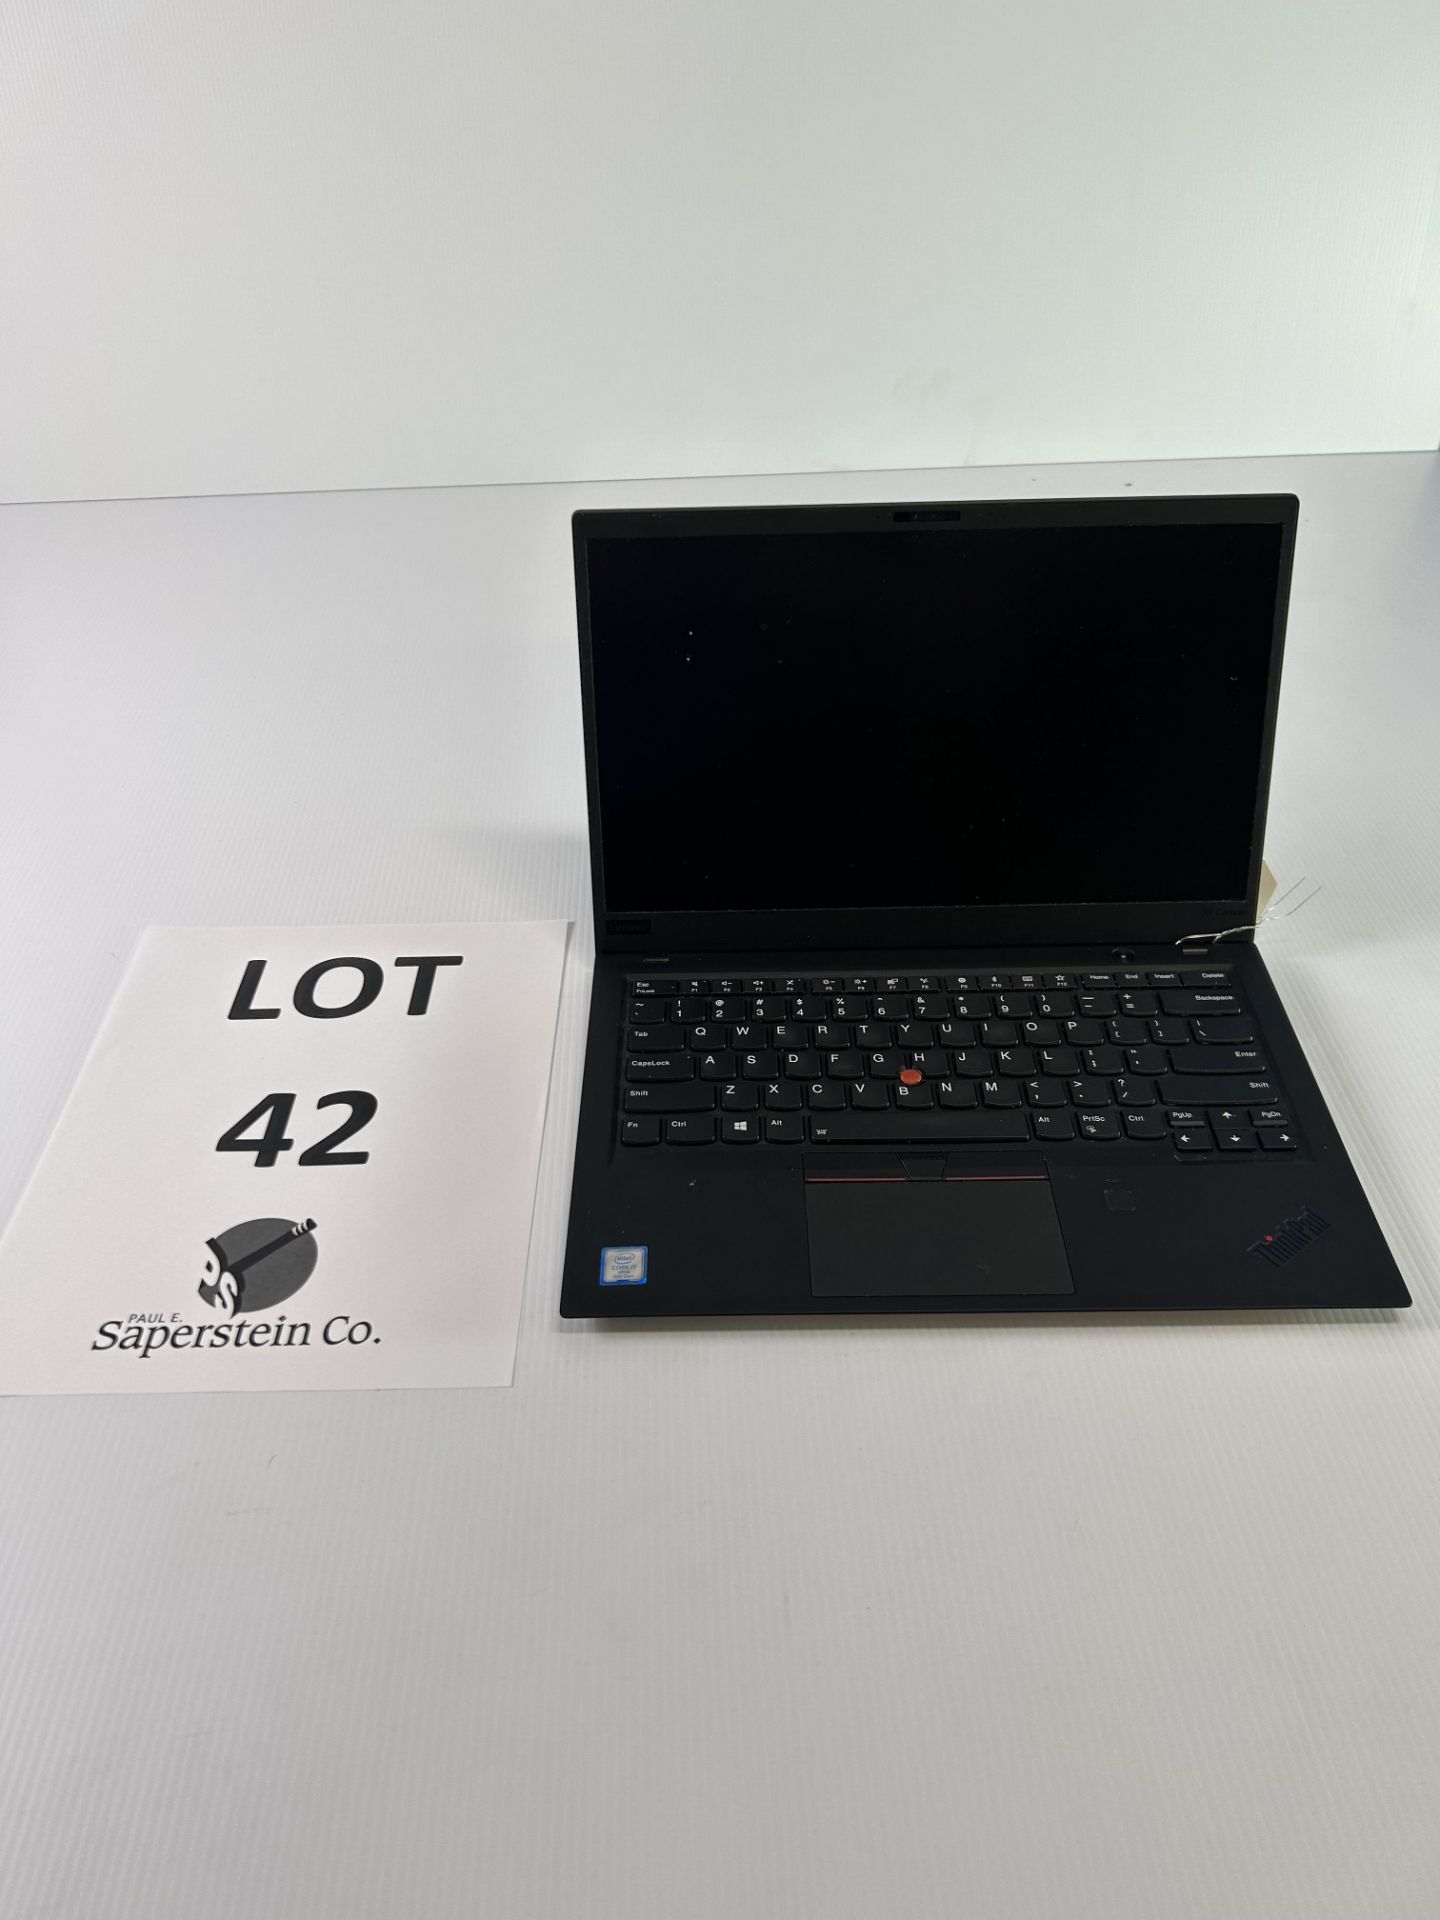 2018 6th Generation ThinkPad X1 Carbon Laptop Model- 20kh-002rus 18/08, 512GB Hard Drive, 8th Gen I7 - Image 2 of 3